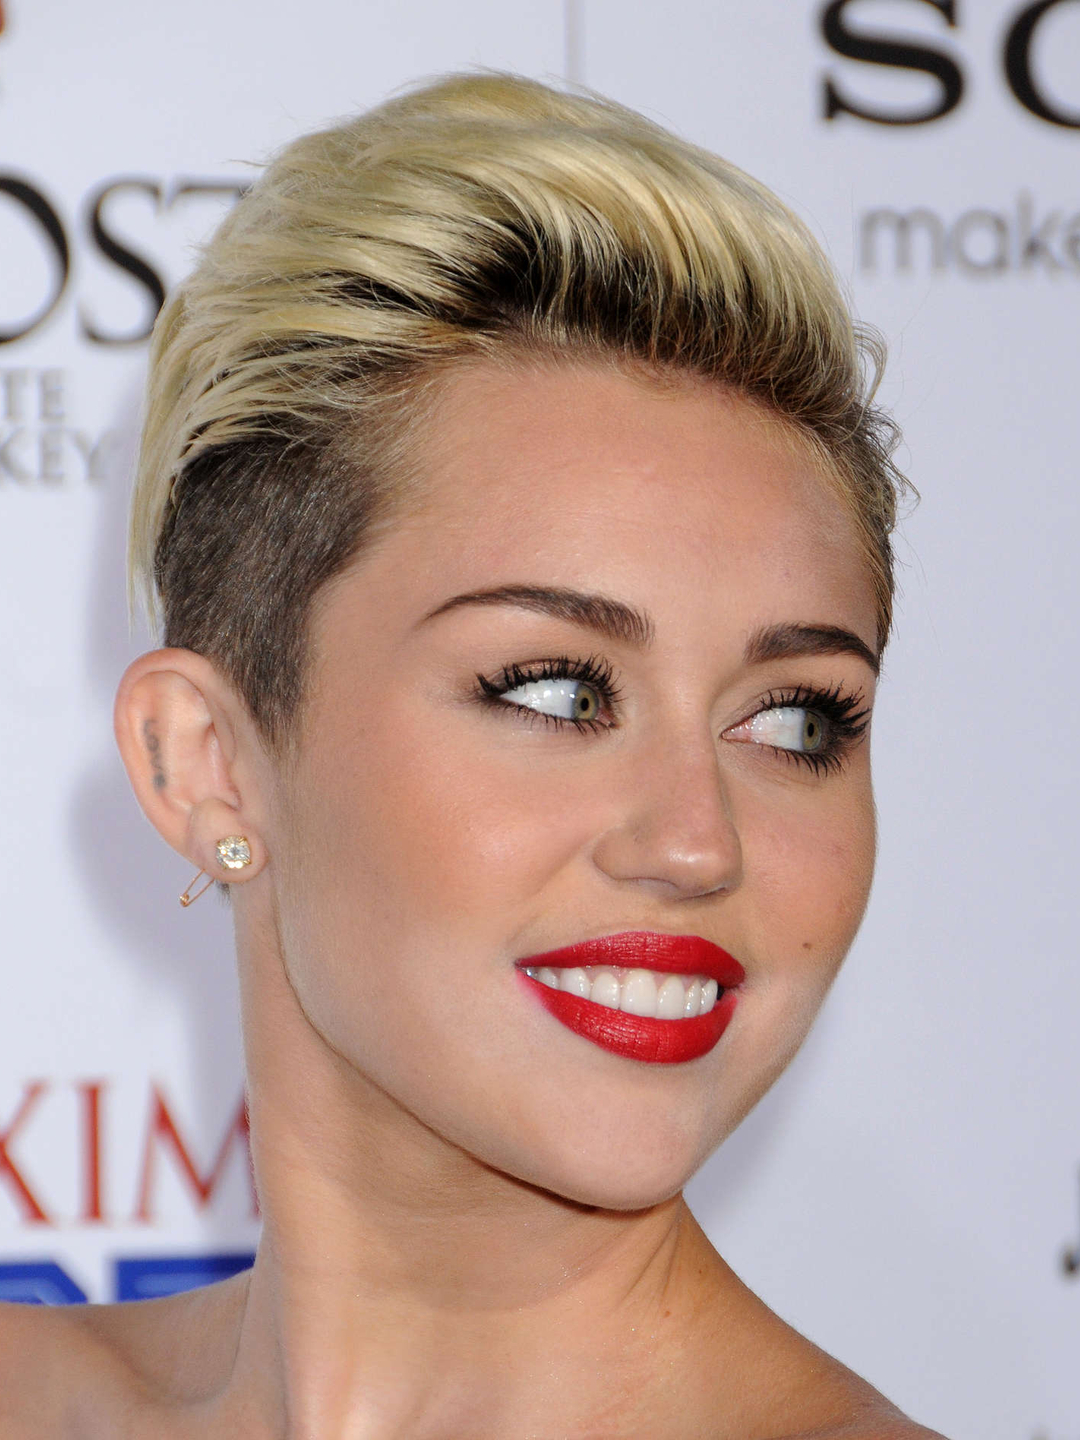 Miley Cyrus education